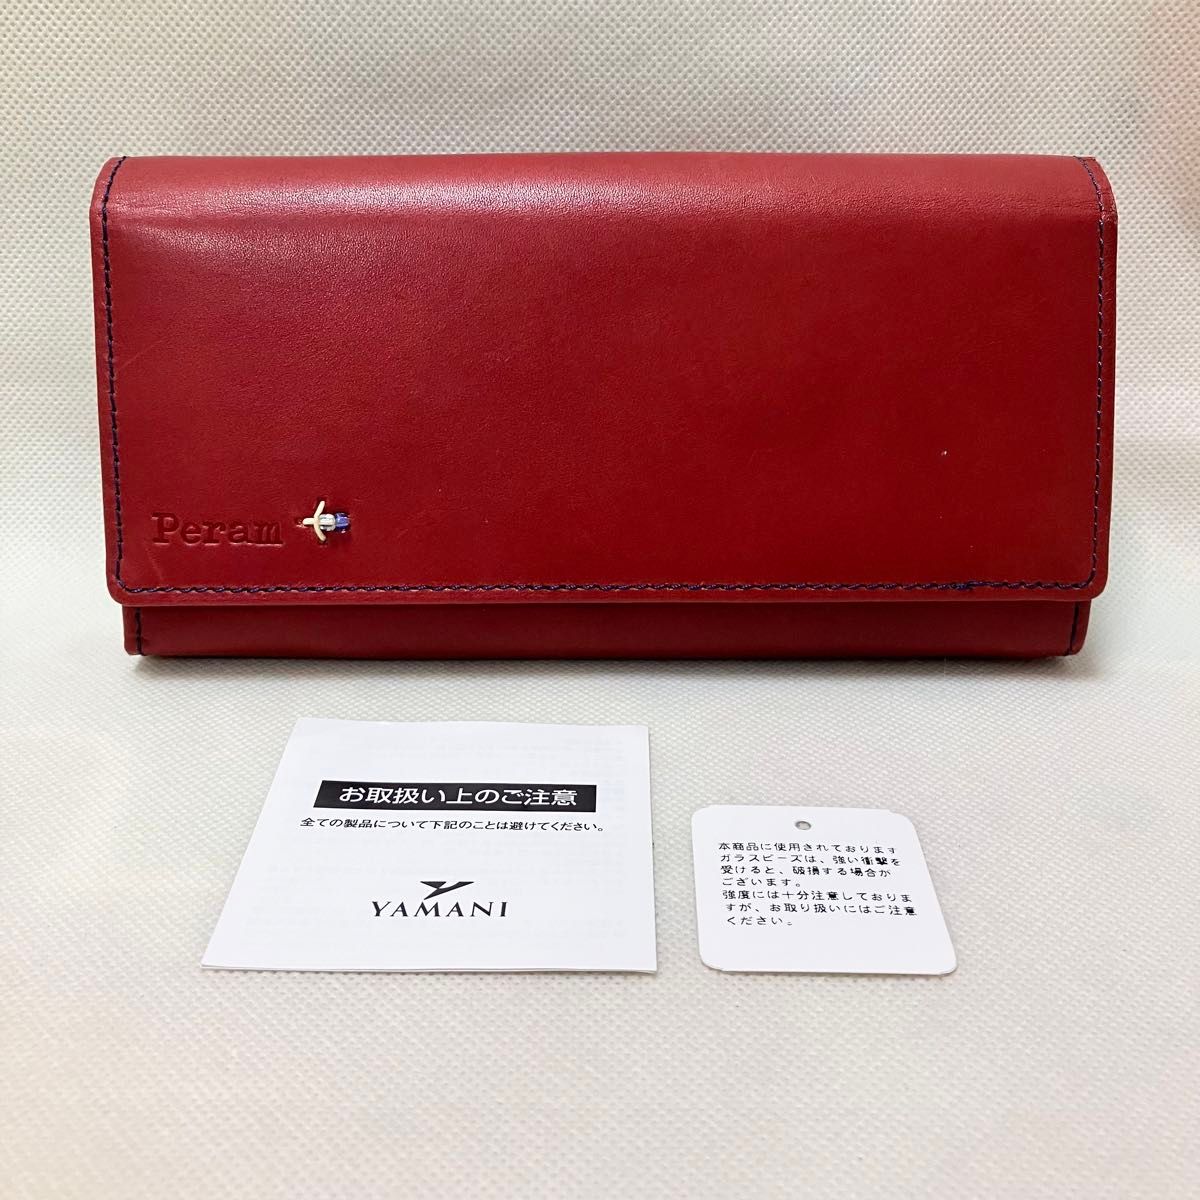 W619 未使用 定価1.8万 ペラム Peram 長財布 財布 フラップ式 レディース 本革 牛革 日本製